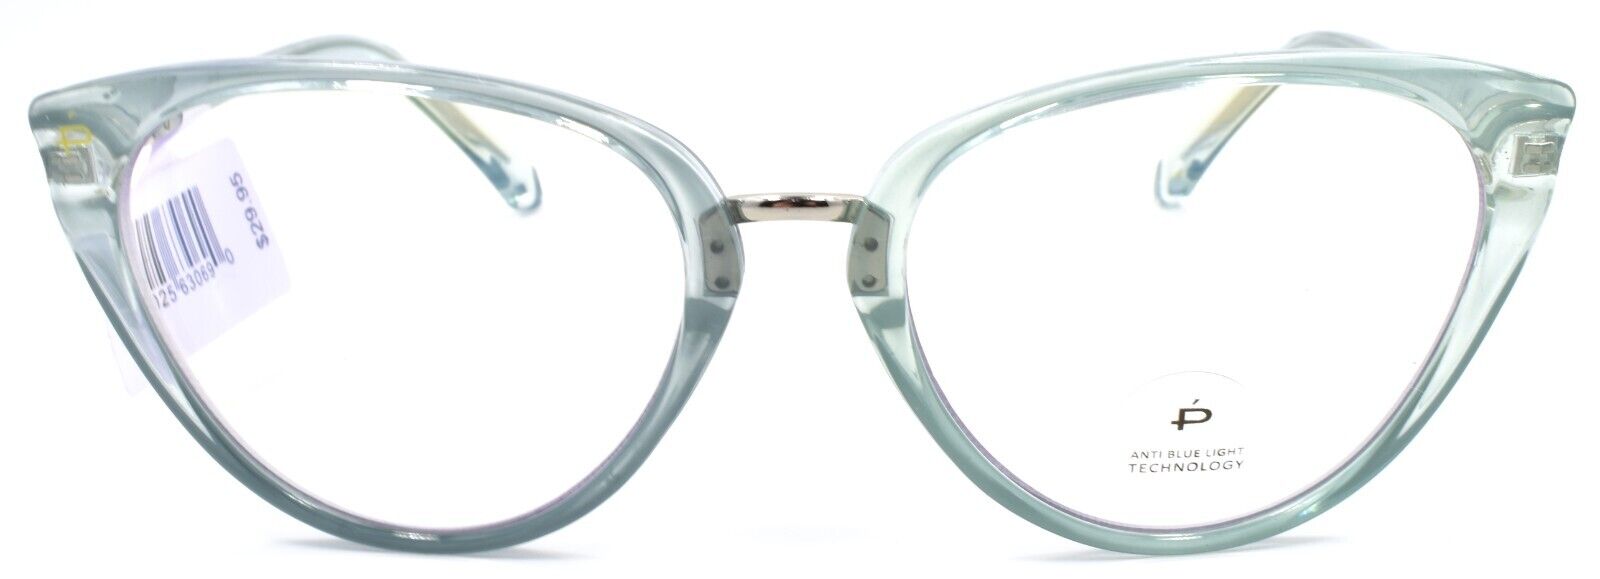 2-Prive Revaux The Modern Eyeglasses Frames Blue Light Blocking RX-ready Baby Blue-810025630690-IKSpecs